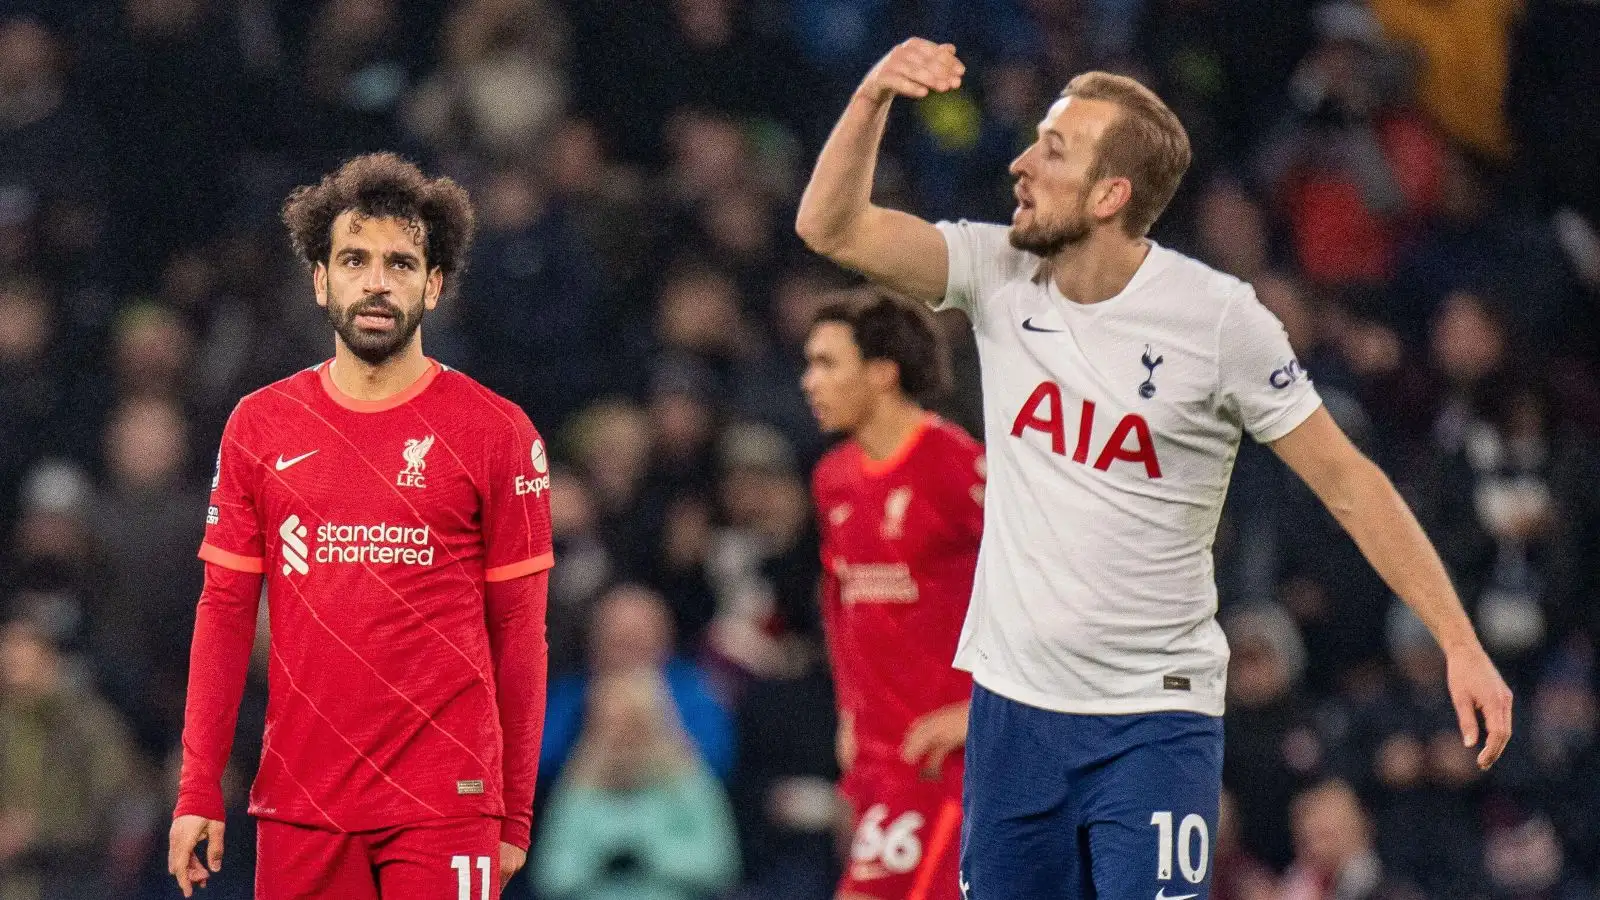 Liverpool forward Mo Salah and Spurs striker Harry Kane react